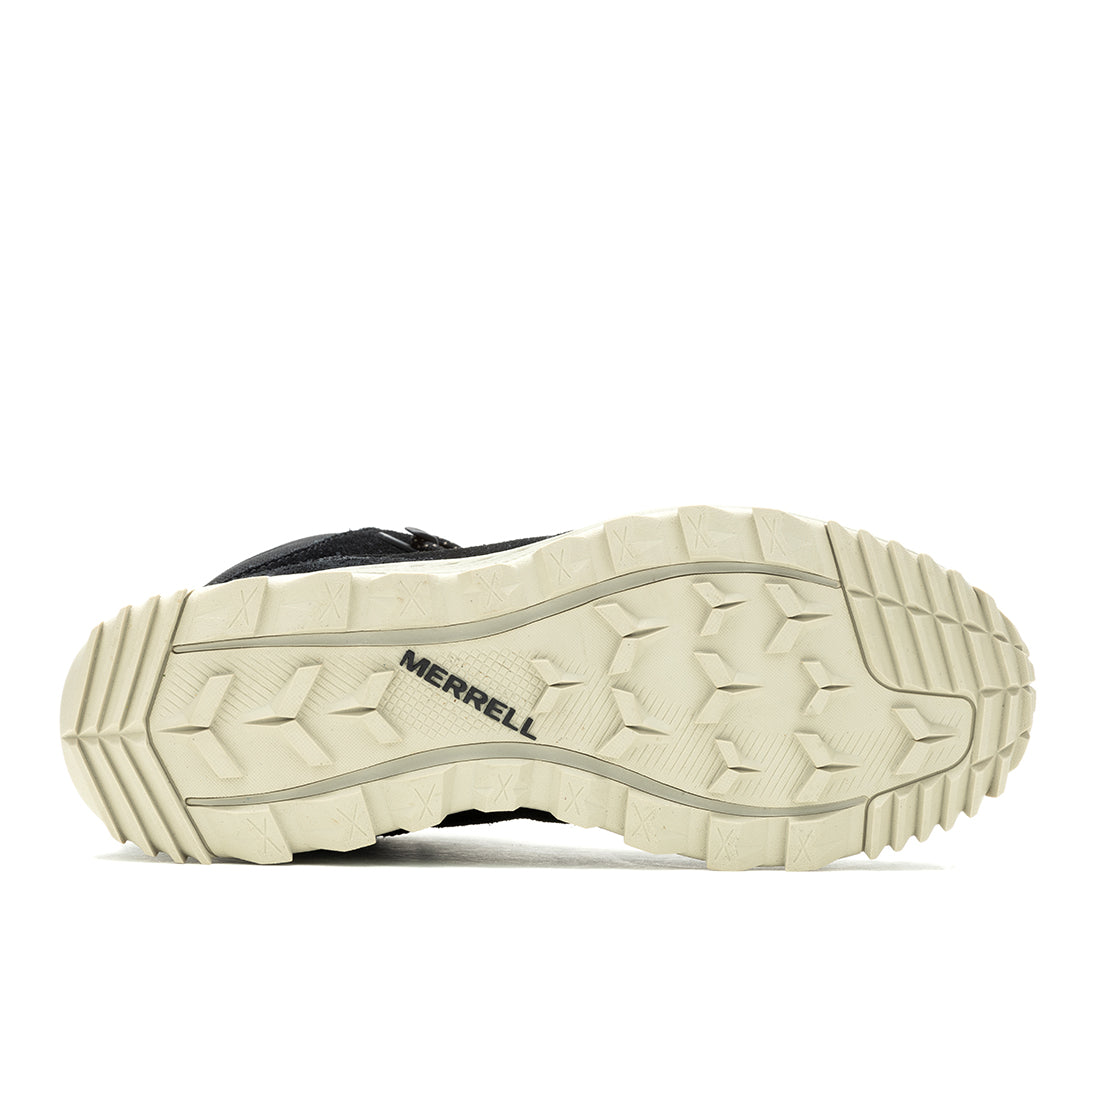 Wildwood Mid Ltr Waterproof - Black Womens Trail Running Shoes